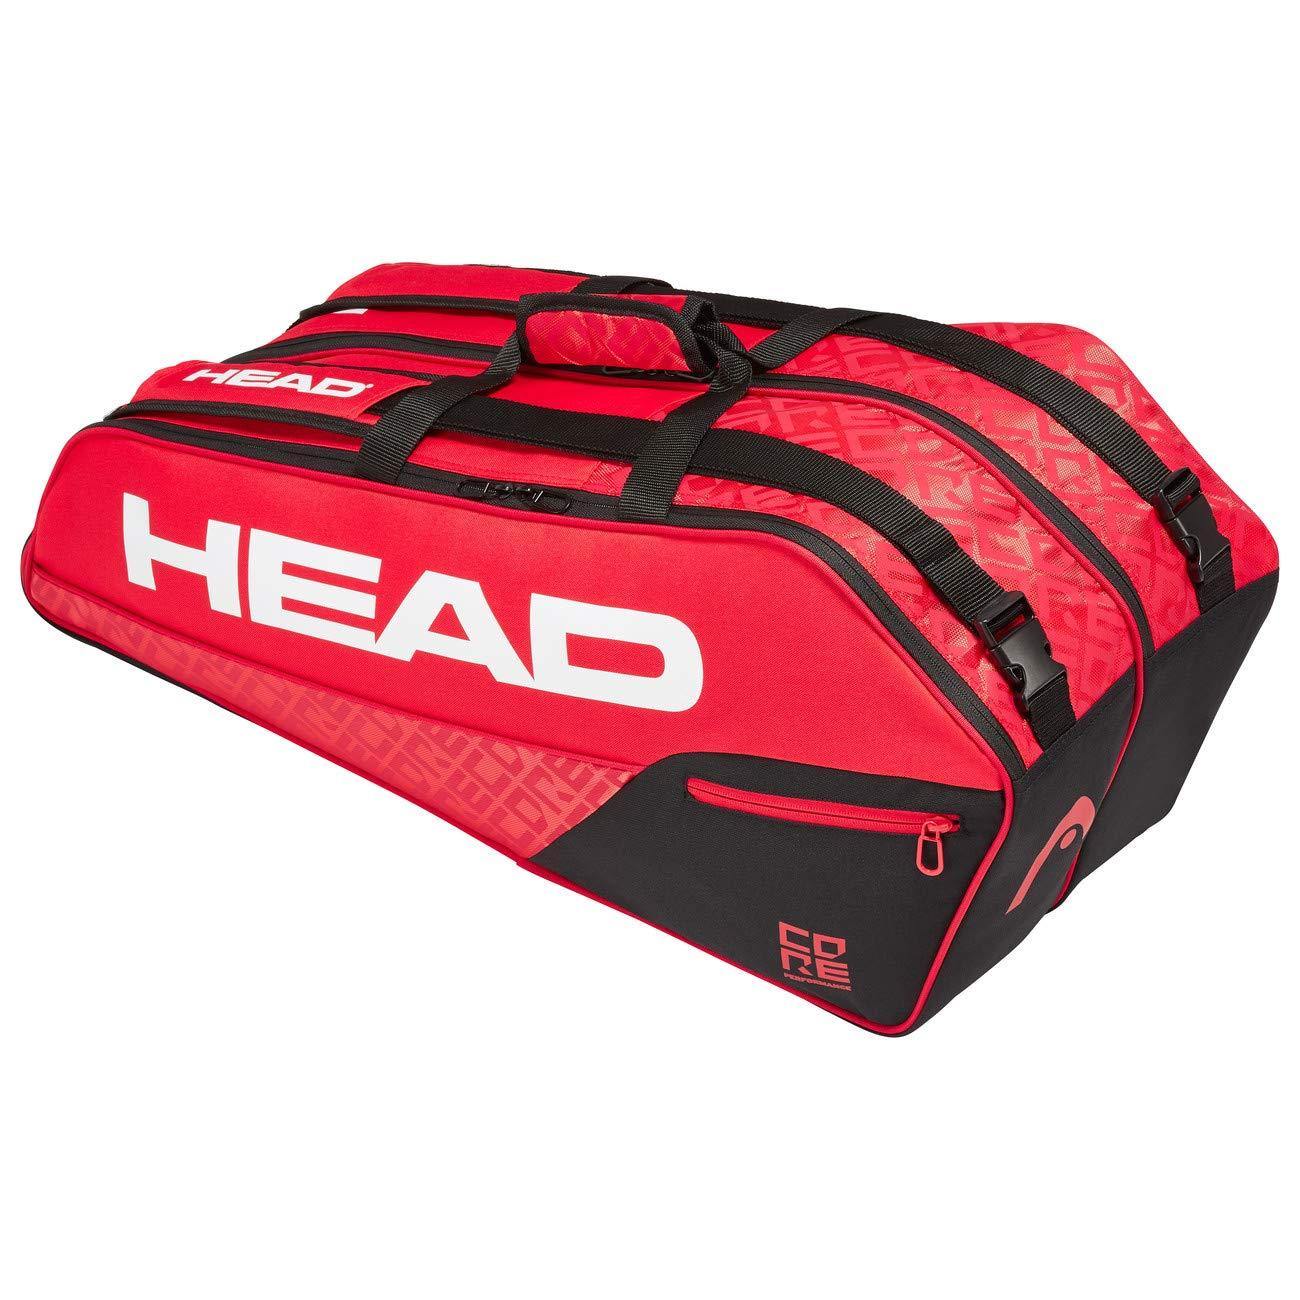 Head Core 6R Combi Kit Bag (Red/Black) - Best Price online Prokicksports.com